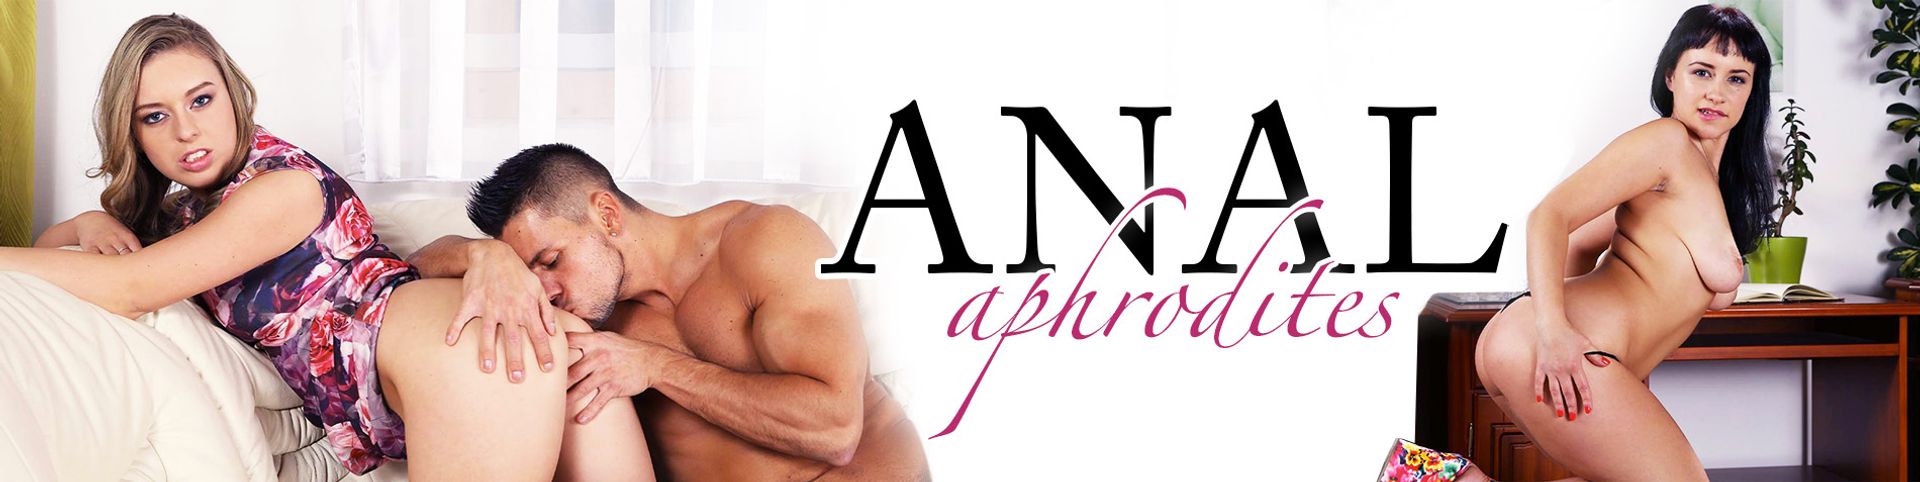 Anal Aphrodite